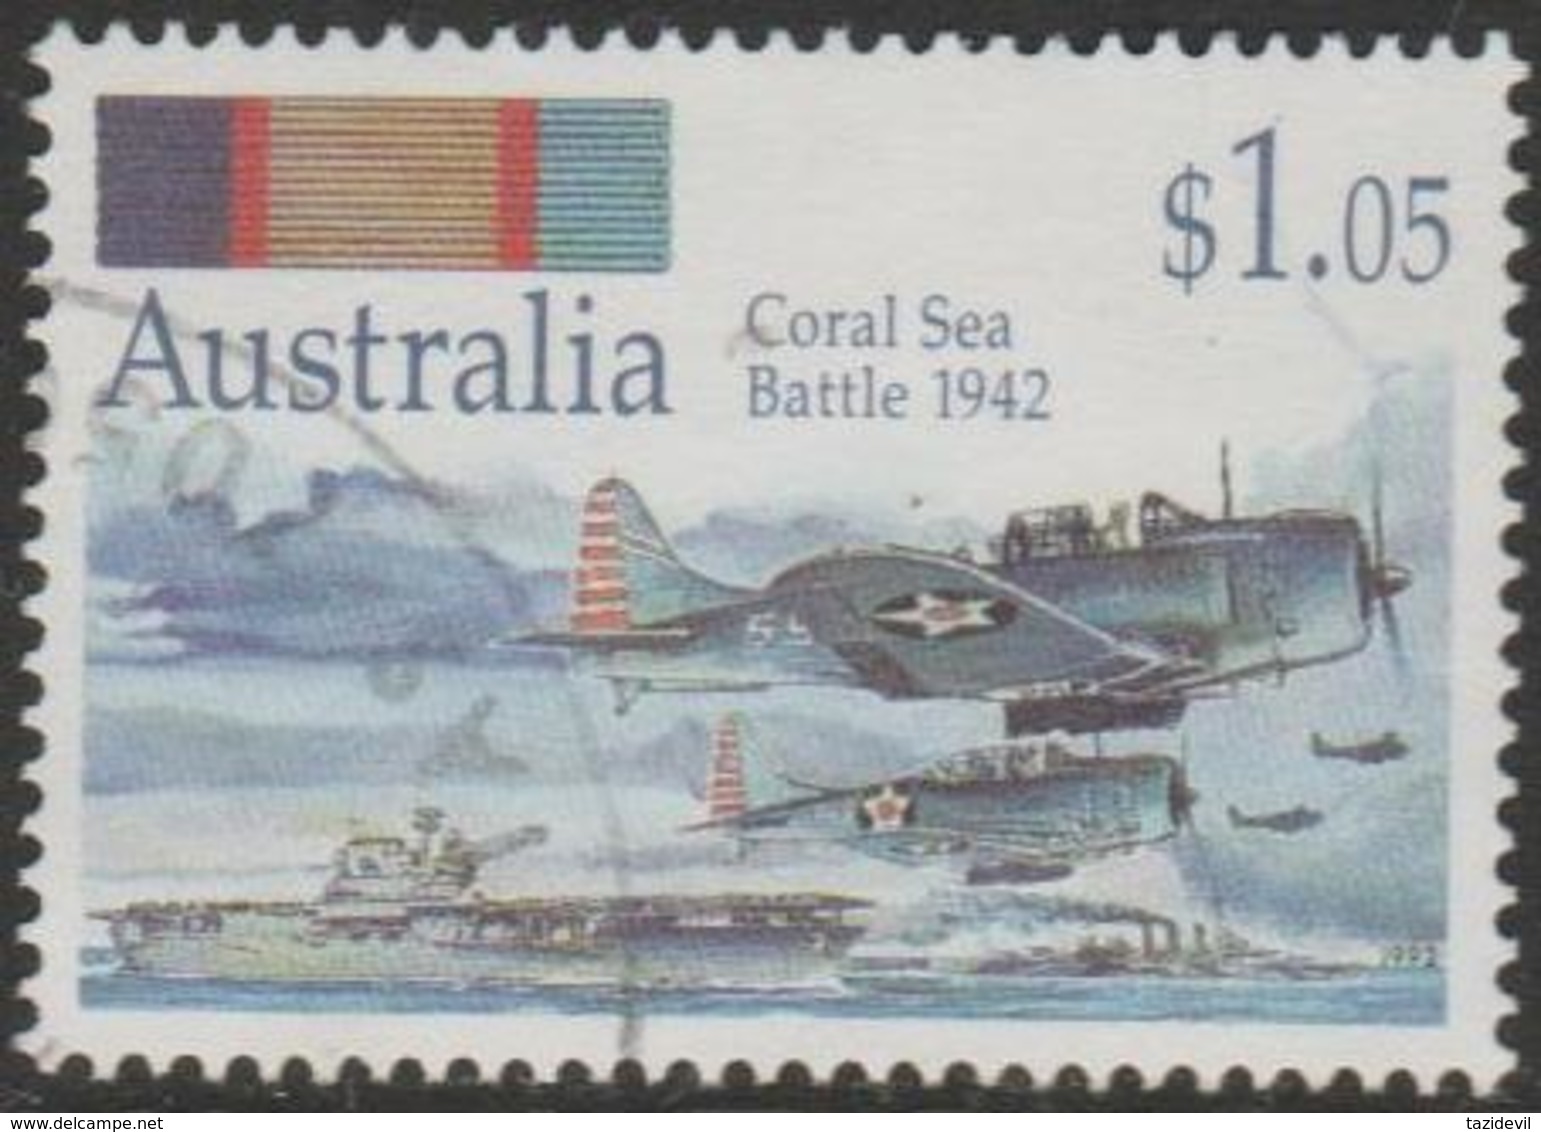 AUSTRALIA - USED 1992 $1.05 Australia At War - Coral Sea Bettle - Ships, Aircraft - Usados